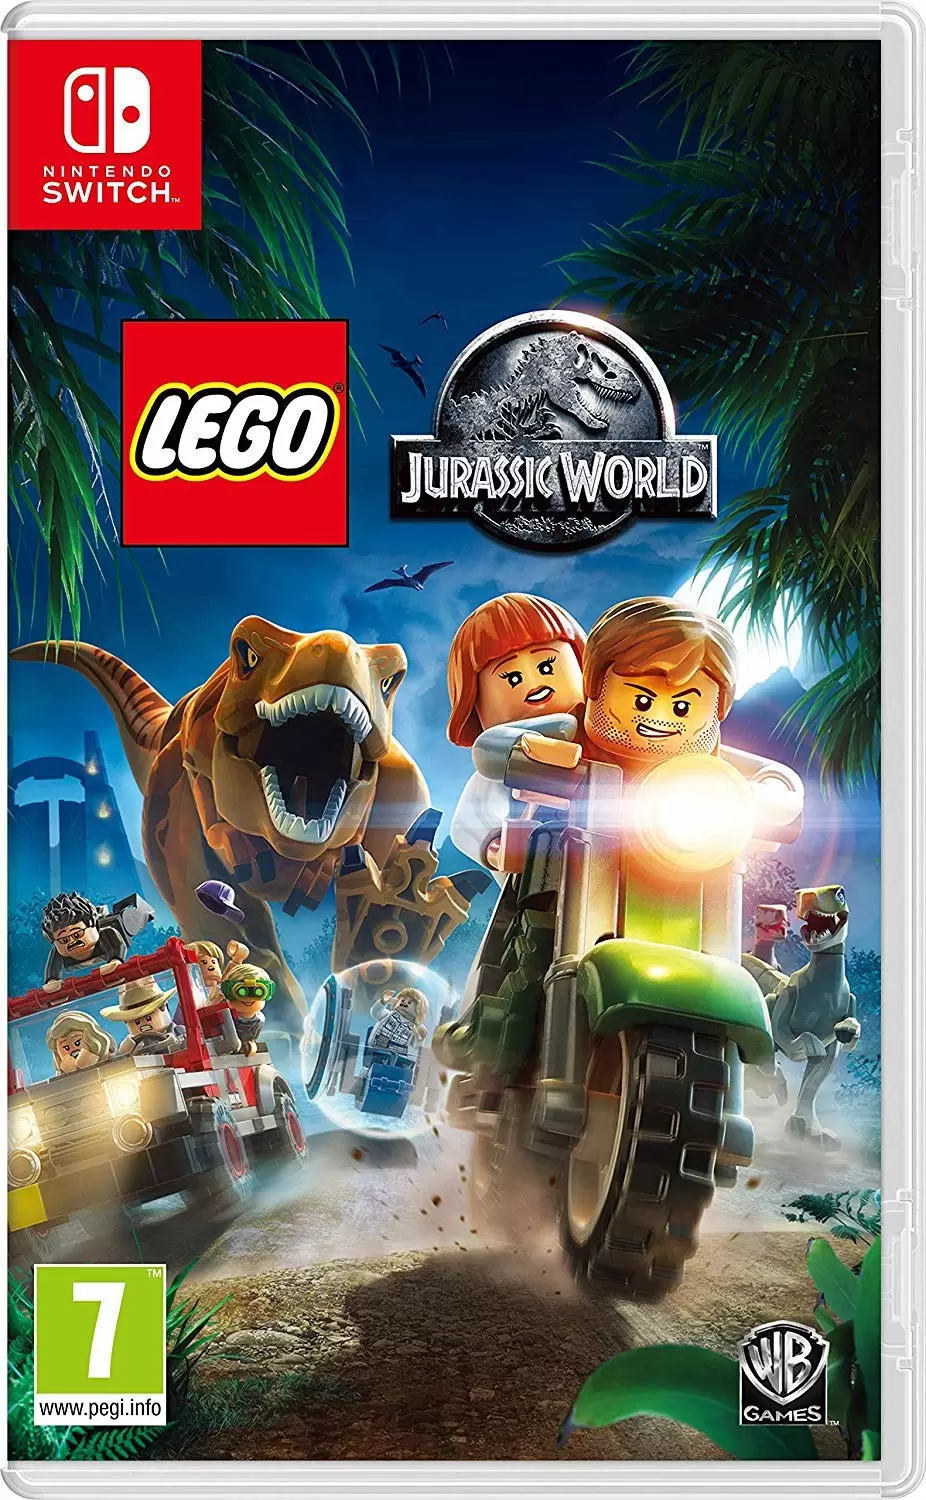 Nintendo Switch Games - LEGO Jurassic World